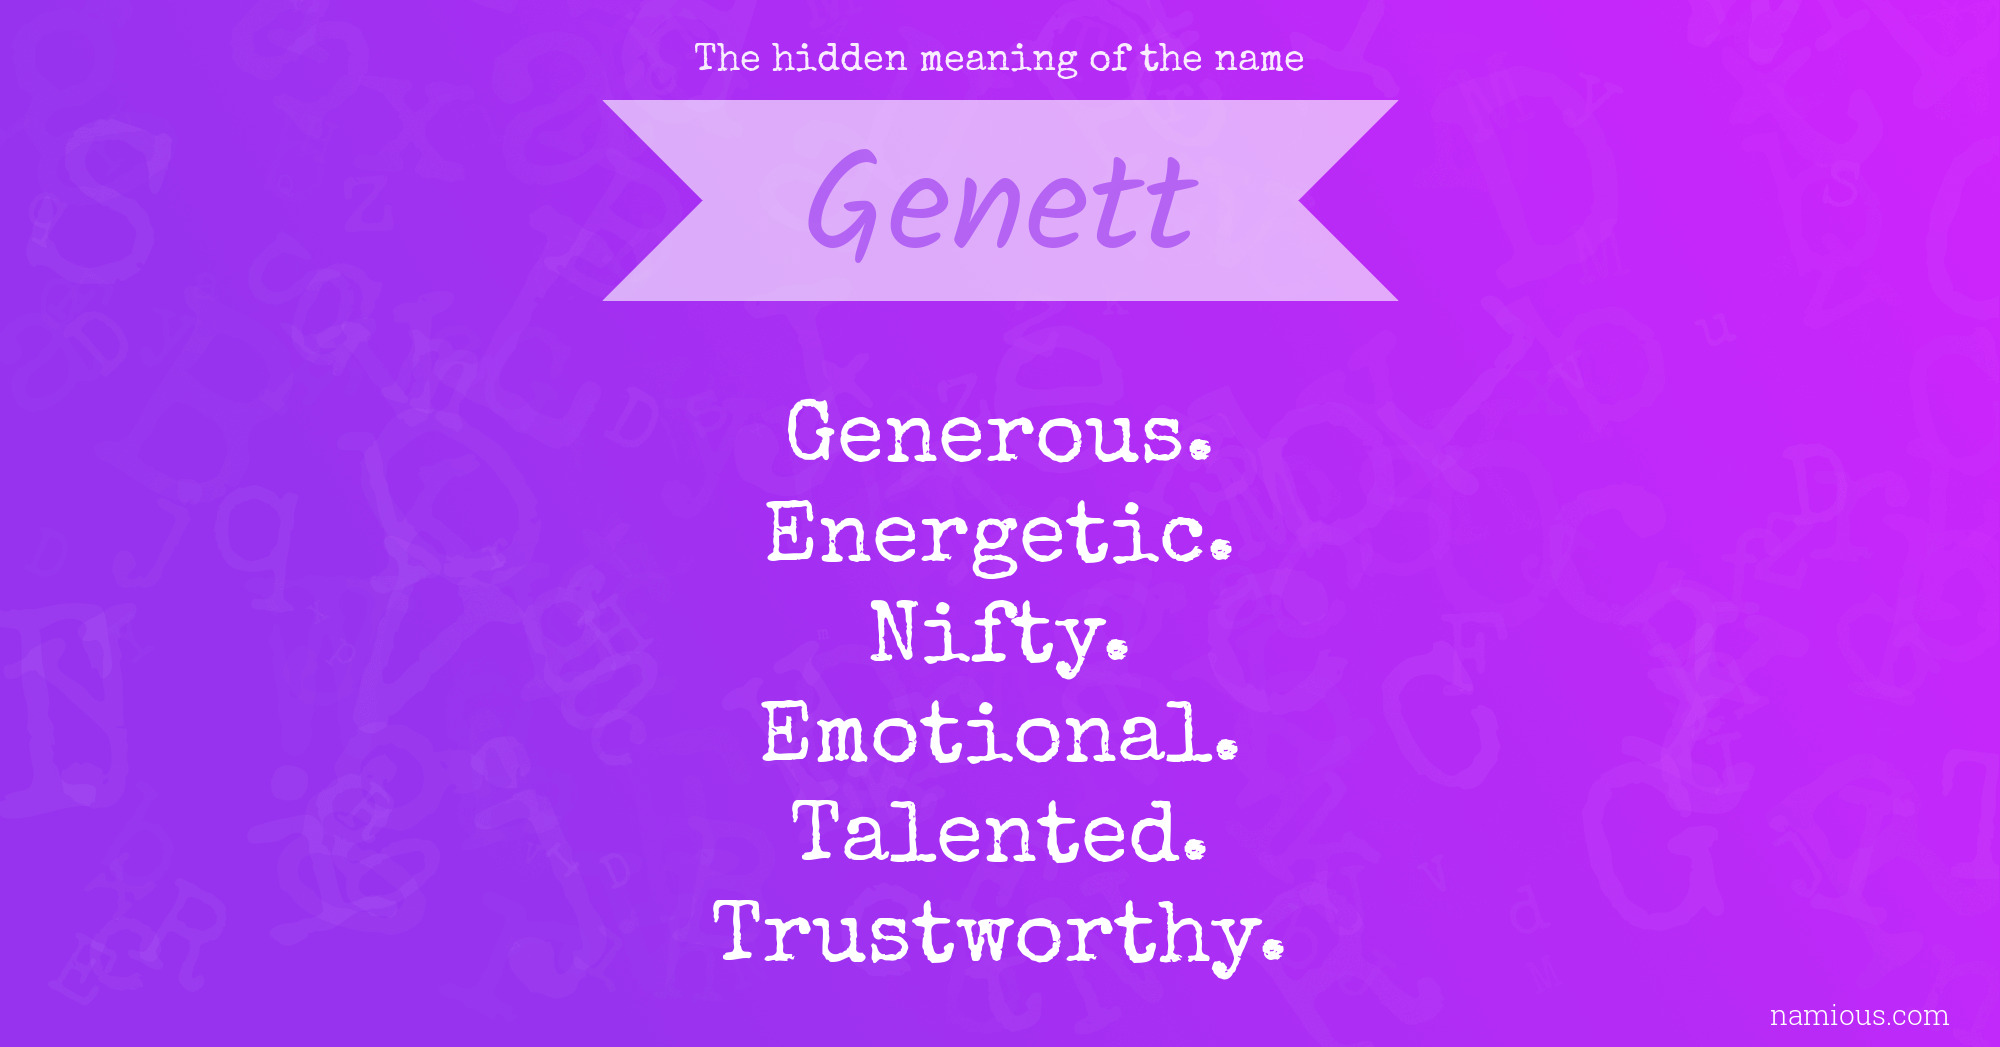 The hidden meaning of the name Genett